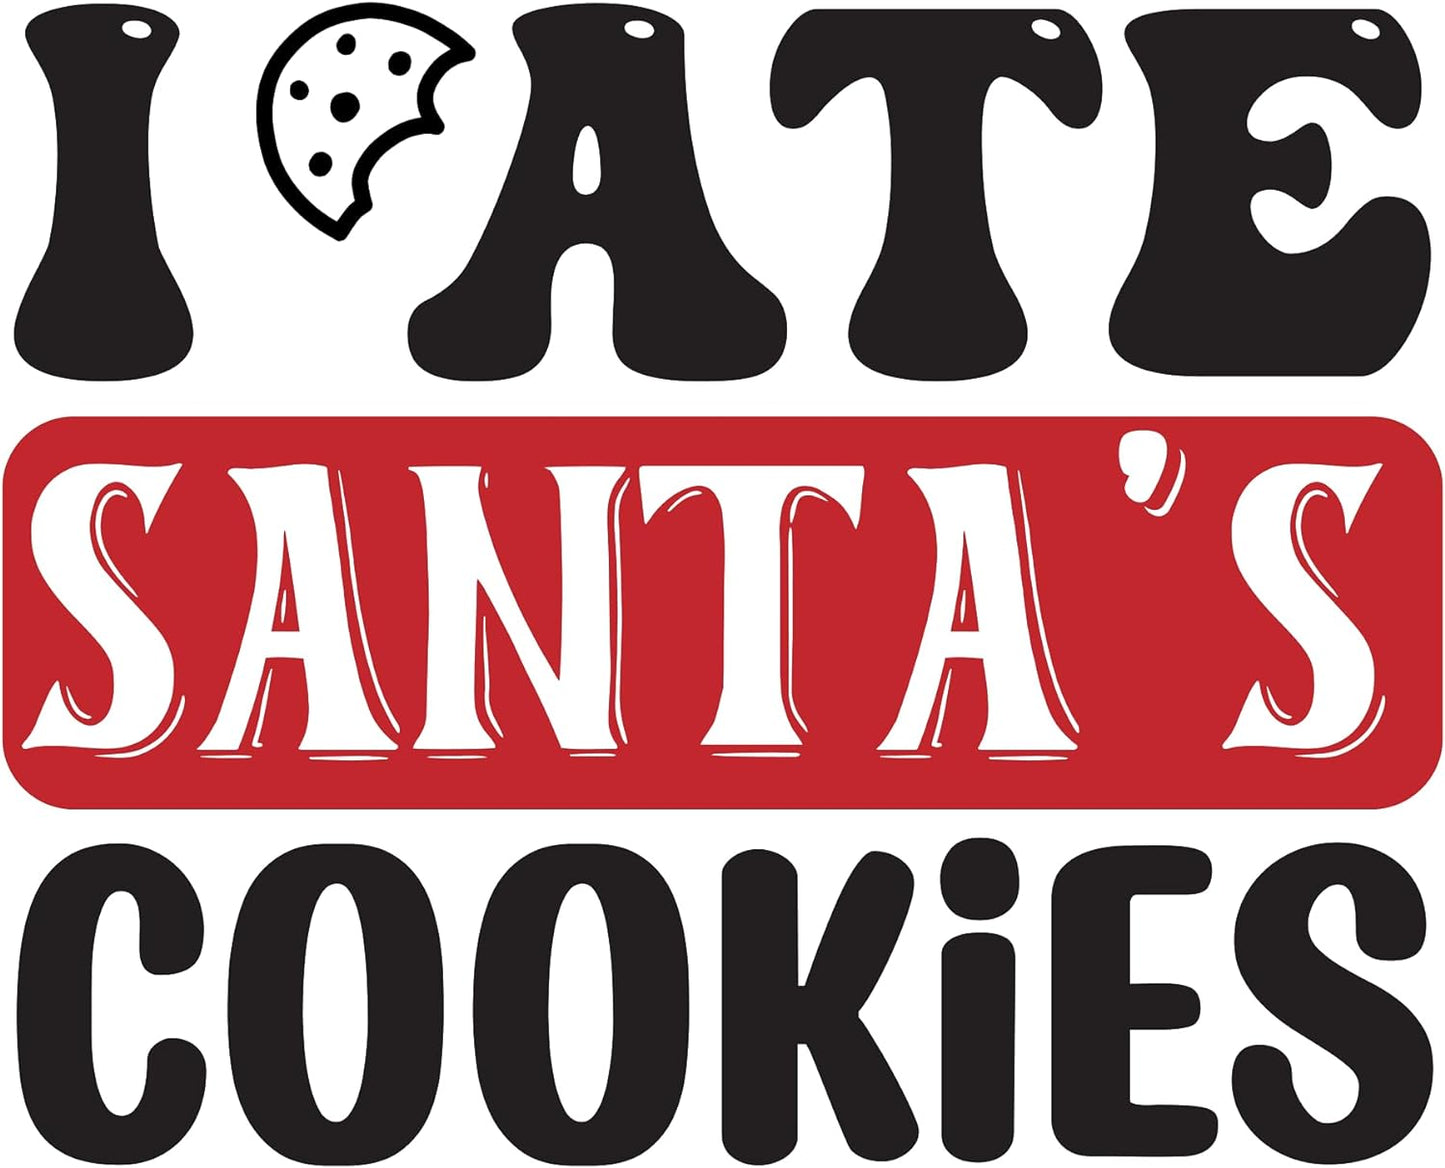 Inspirational Quote I Ate Santa's Cookies - Motivational Sticker Vinyl Decal Motivation Stickers- 5" Vinyl Sticker Waterproof